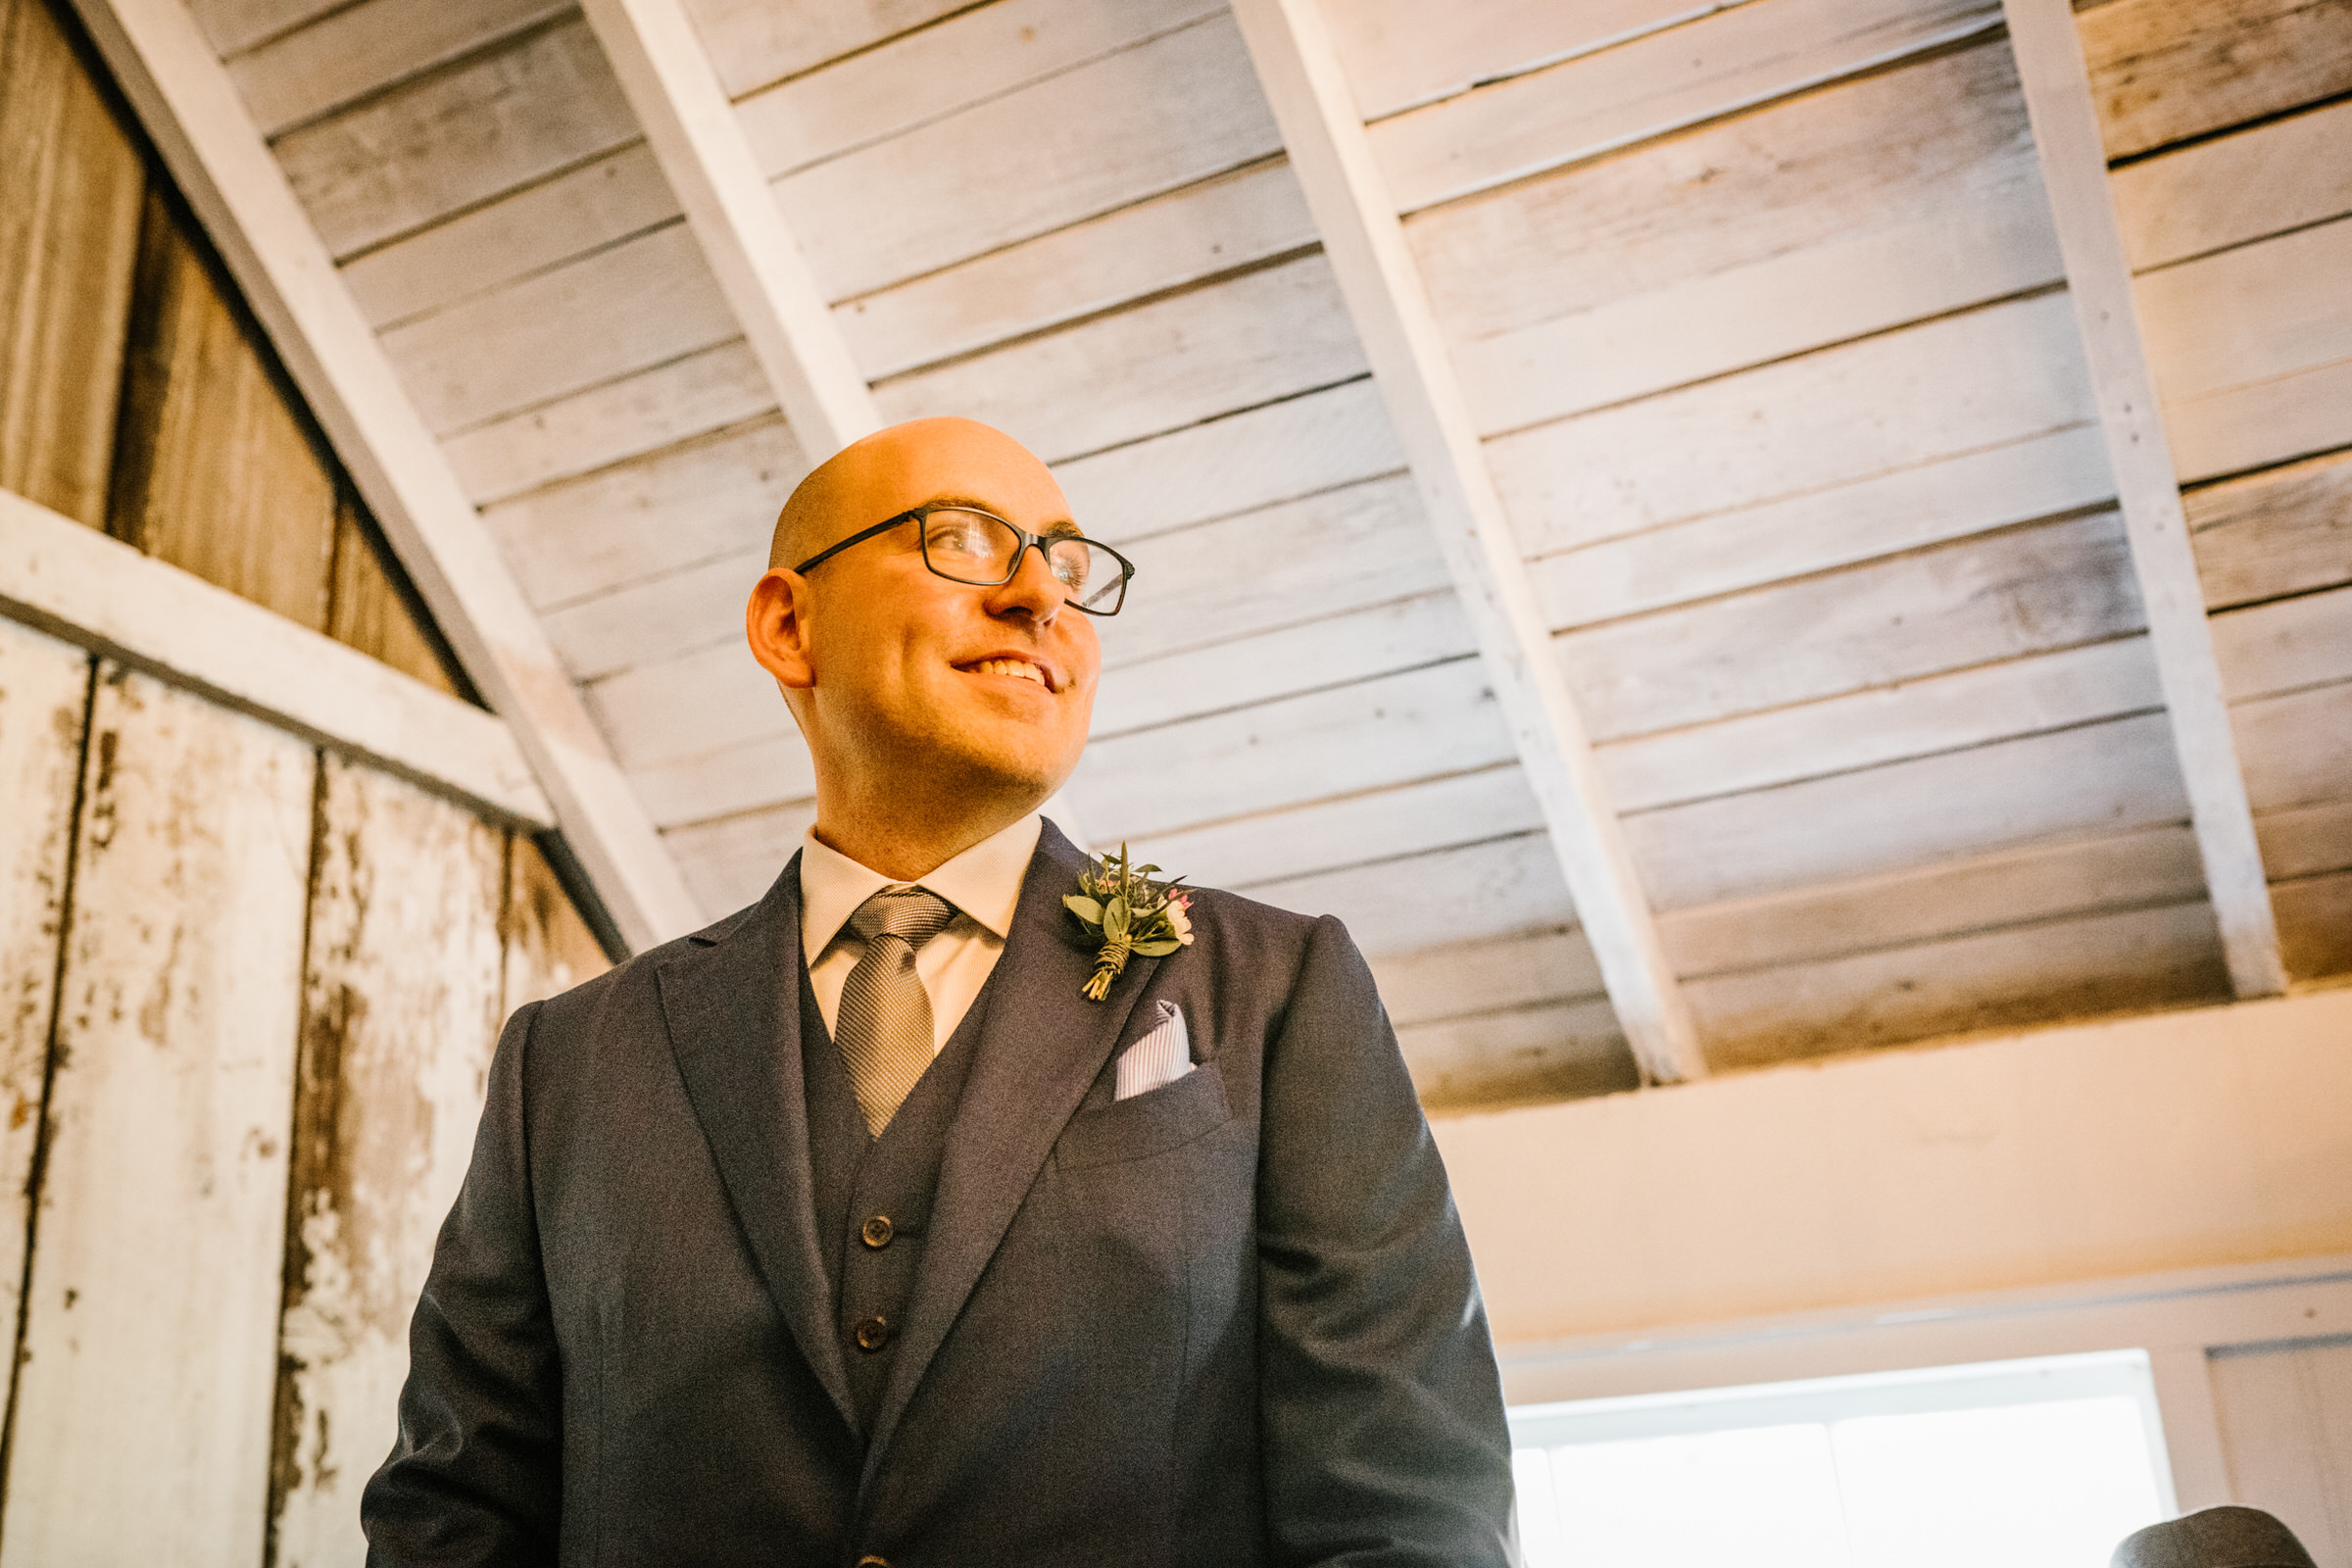 Wayfarer Whidbey Island Wedding: Joe watches his bride walk down the aisle